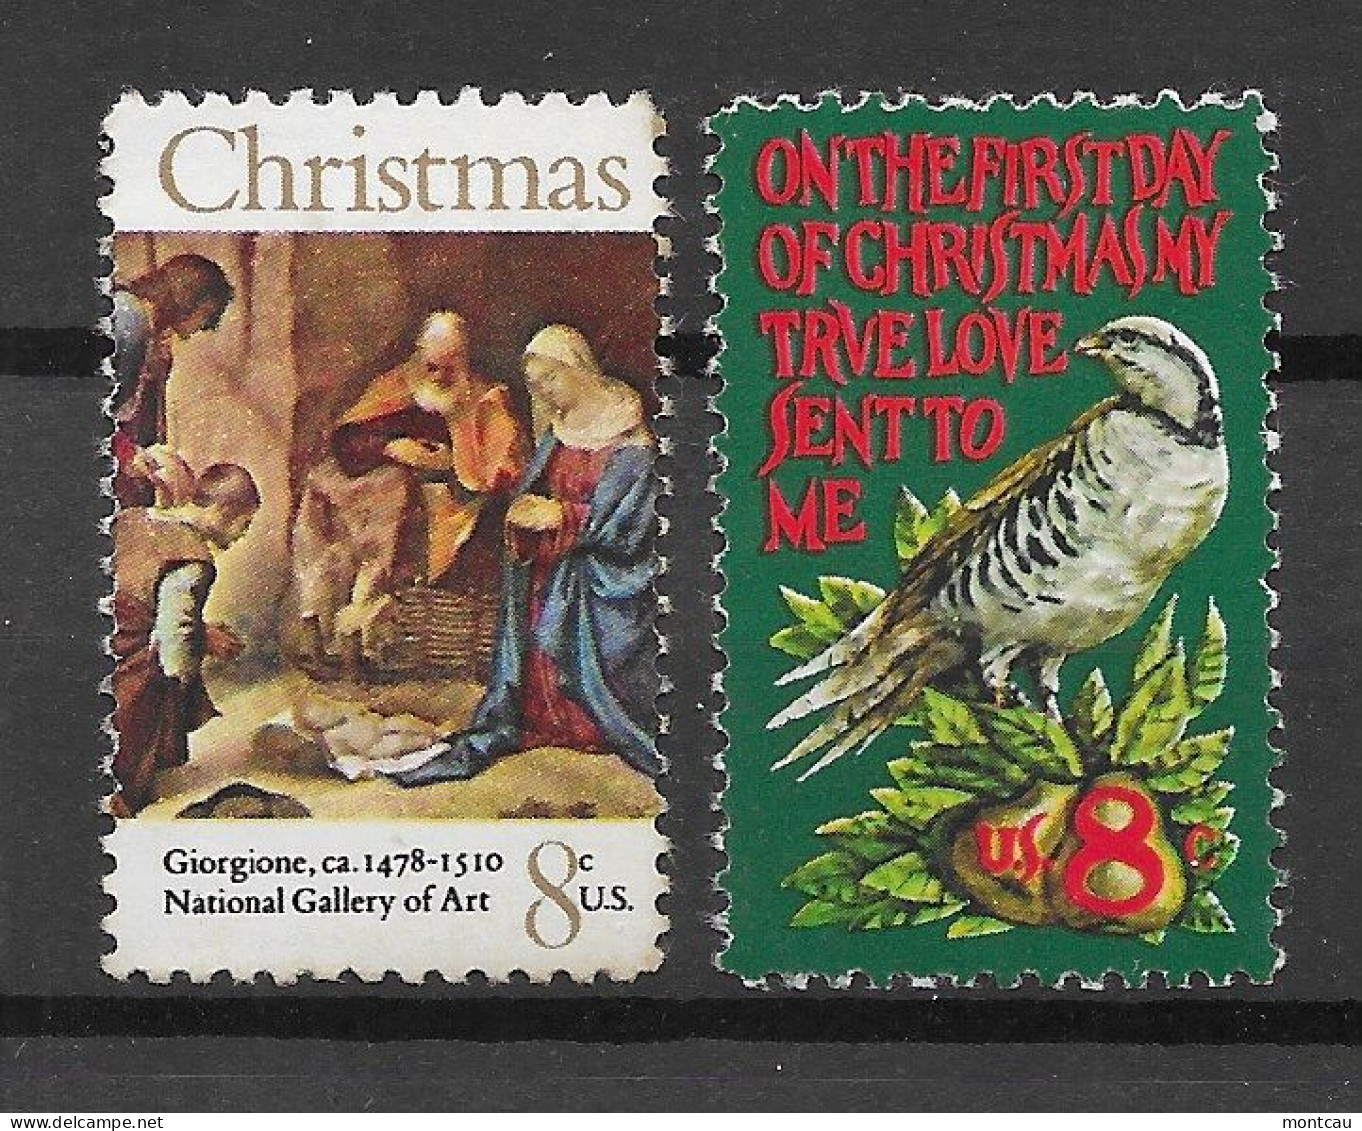 USA 1971.  Christmas Sc 1444-45  (**) - Nuovi